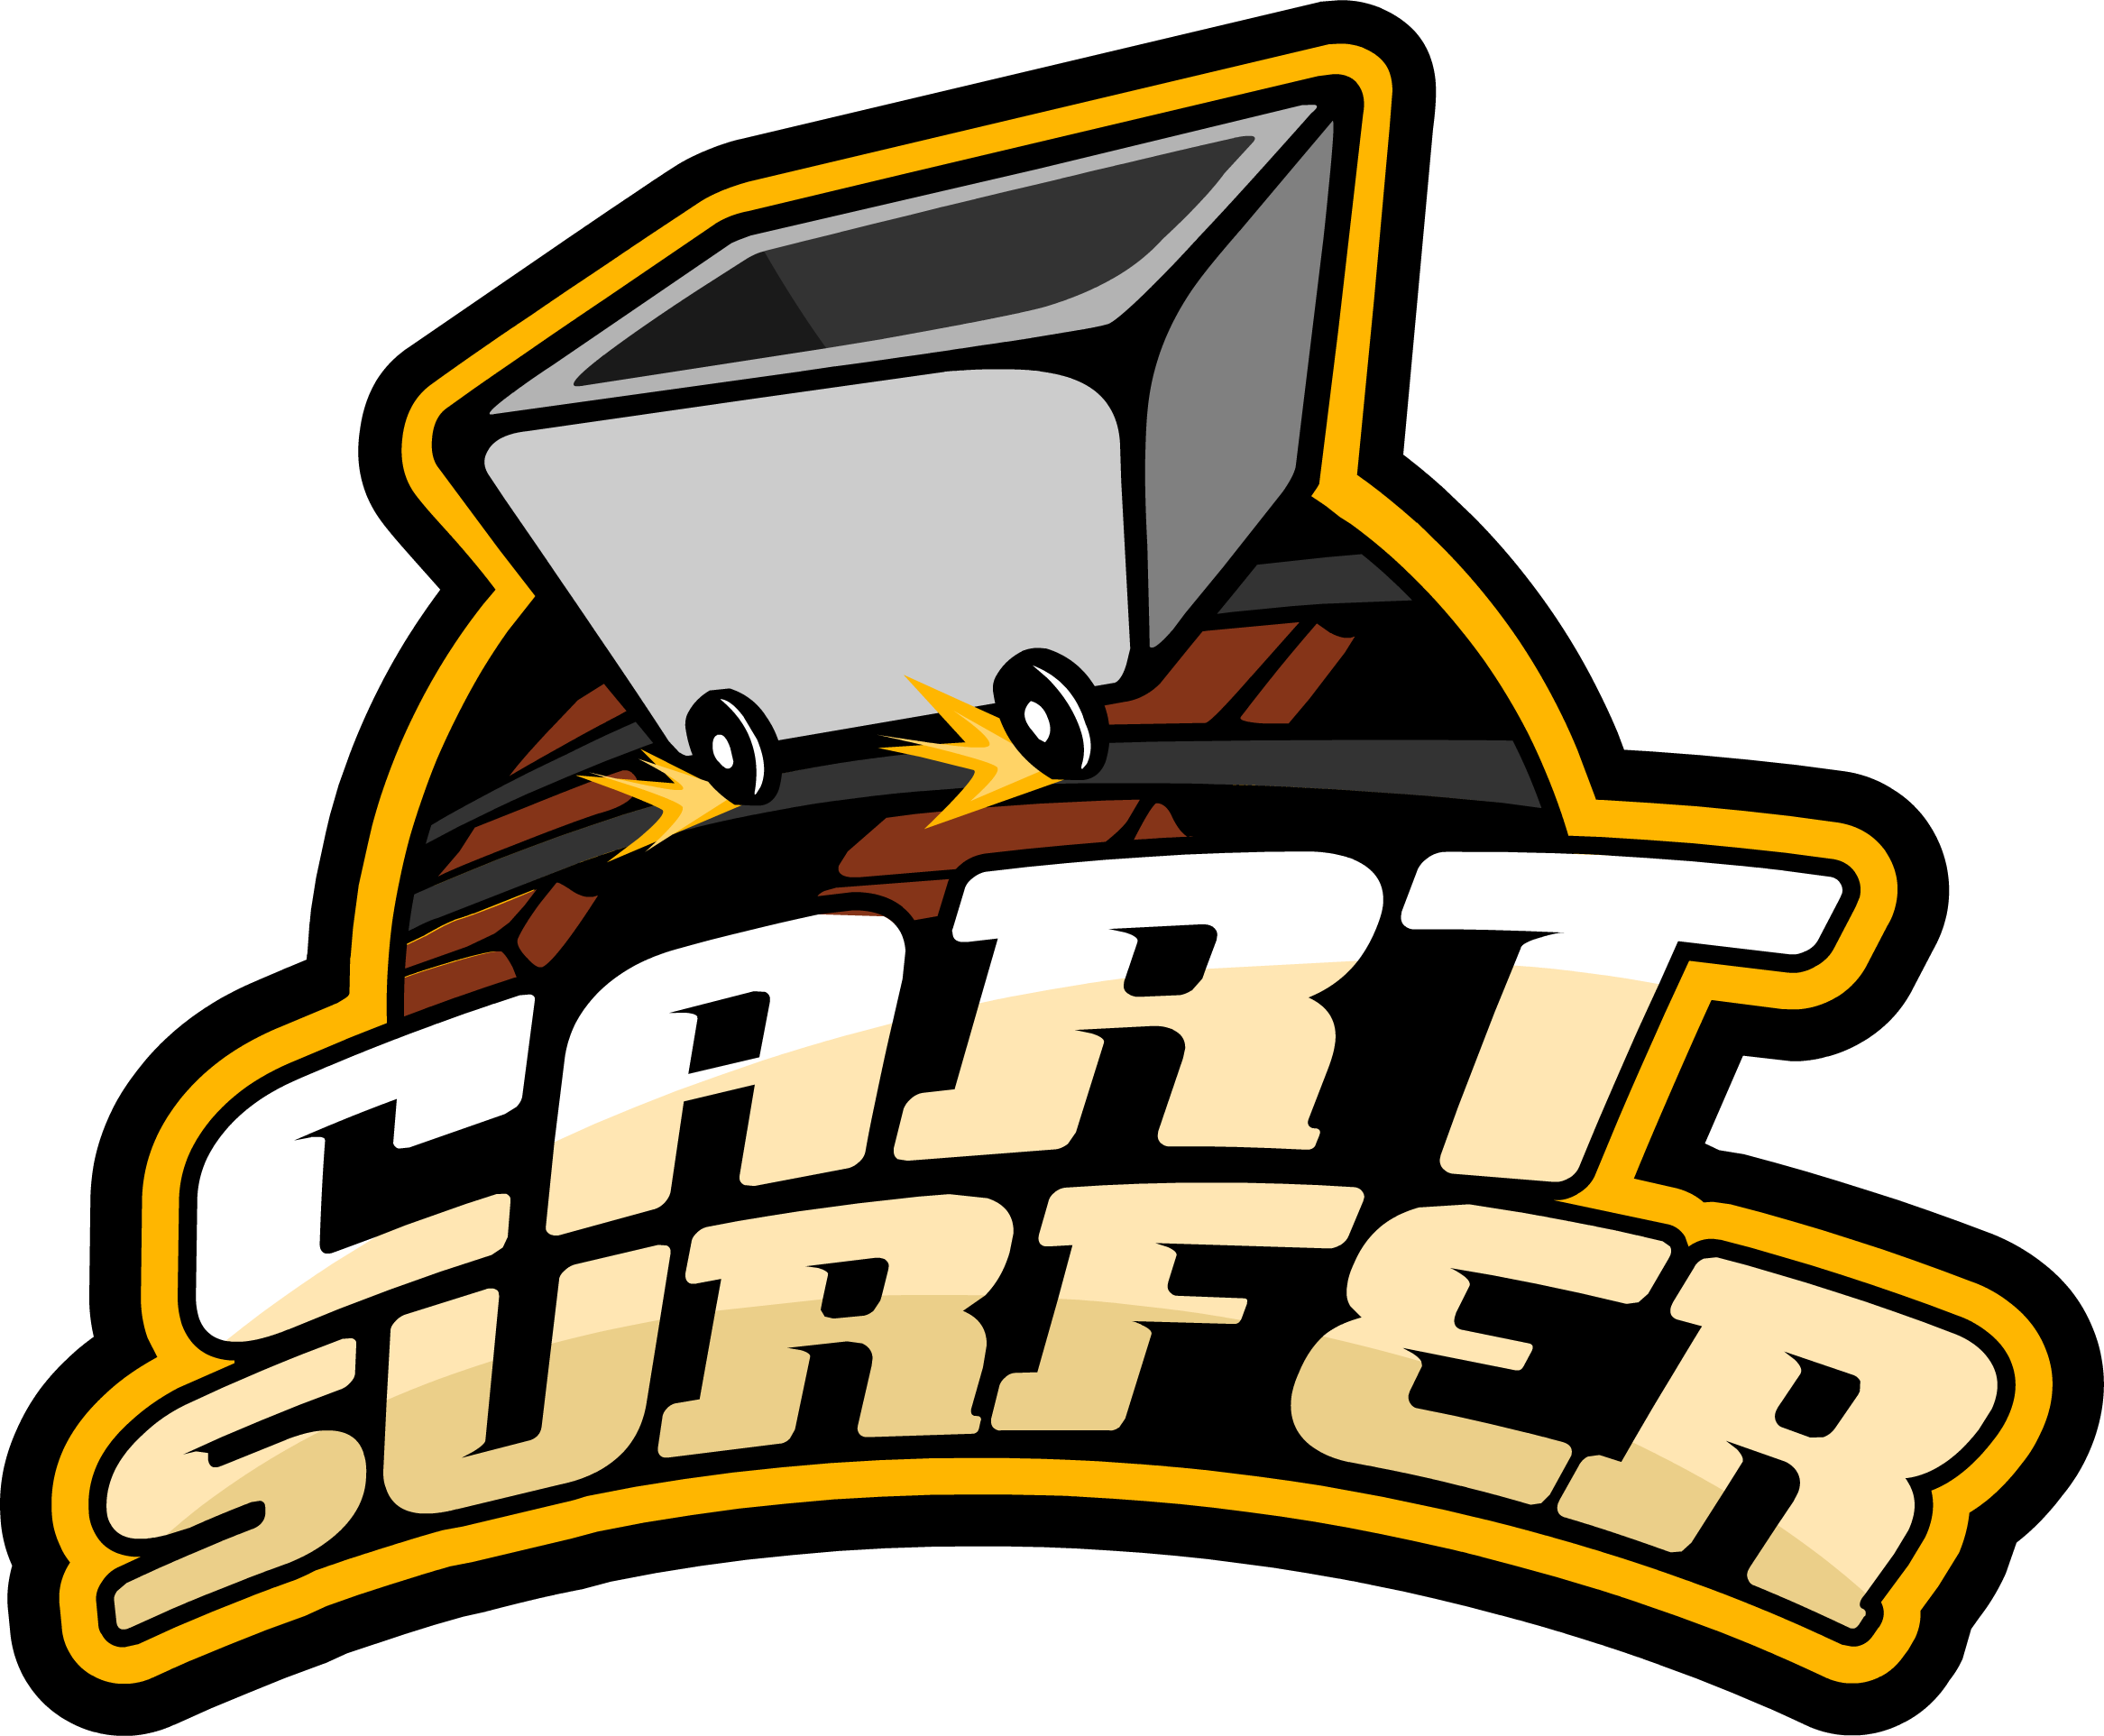 Cart Surfer Club Penguin Wiki Fandom Powered By Wikia - 